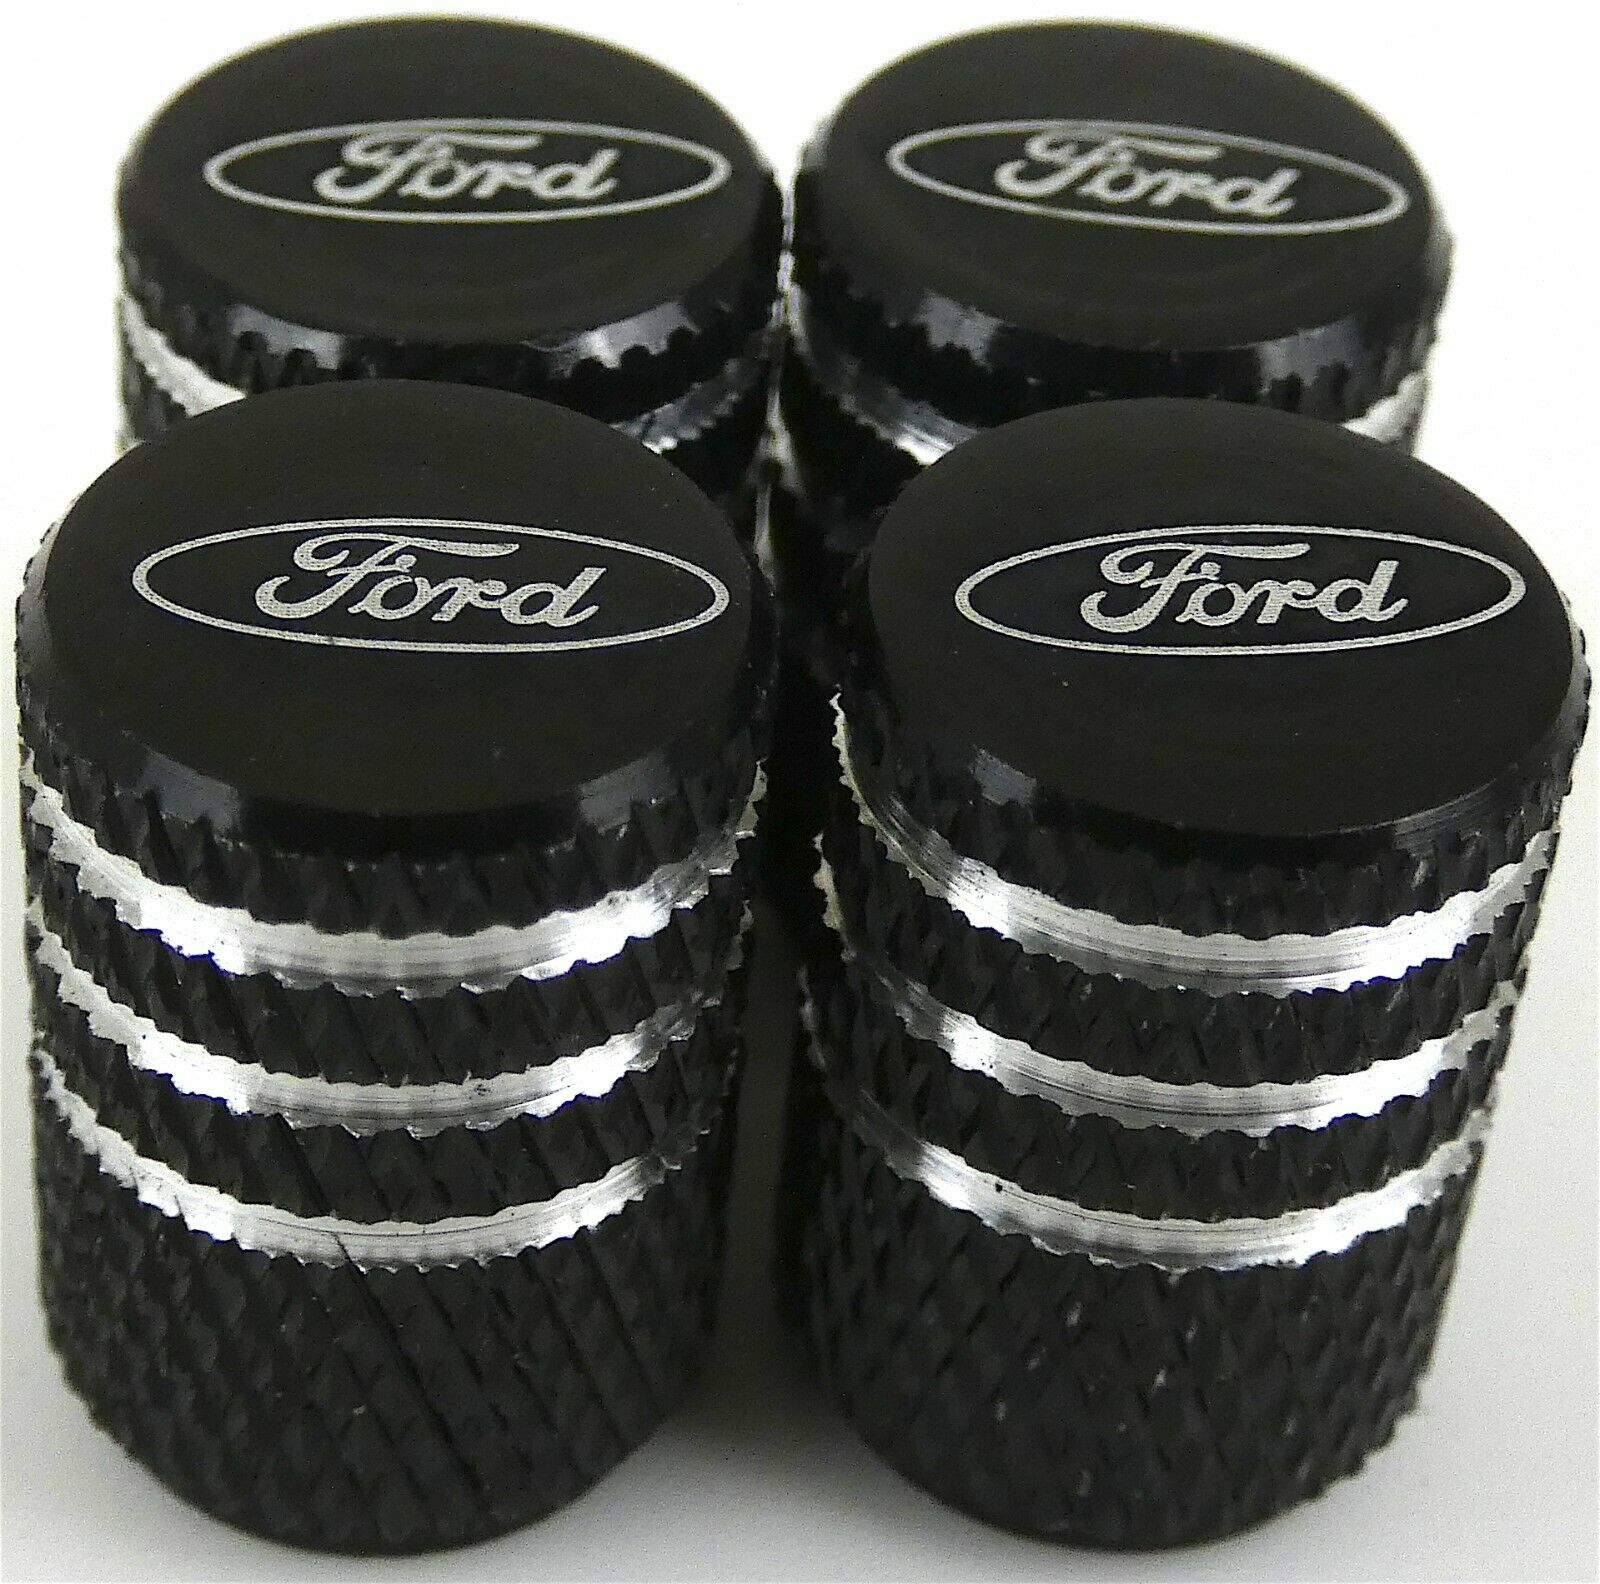 4x Ford Tire Valve Stem Caps For Car, Truck Universal Fitting (black)